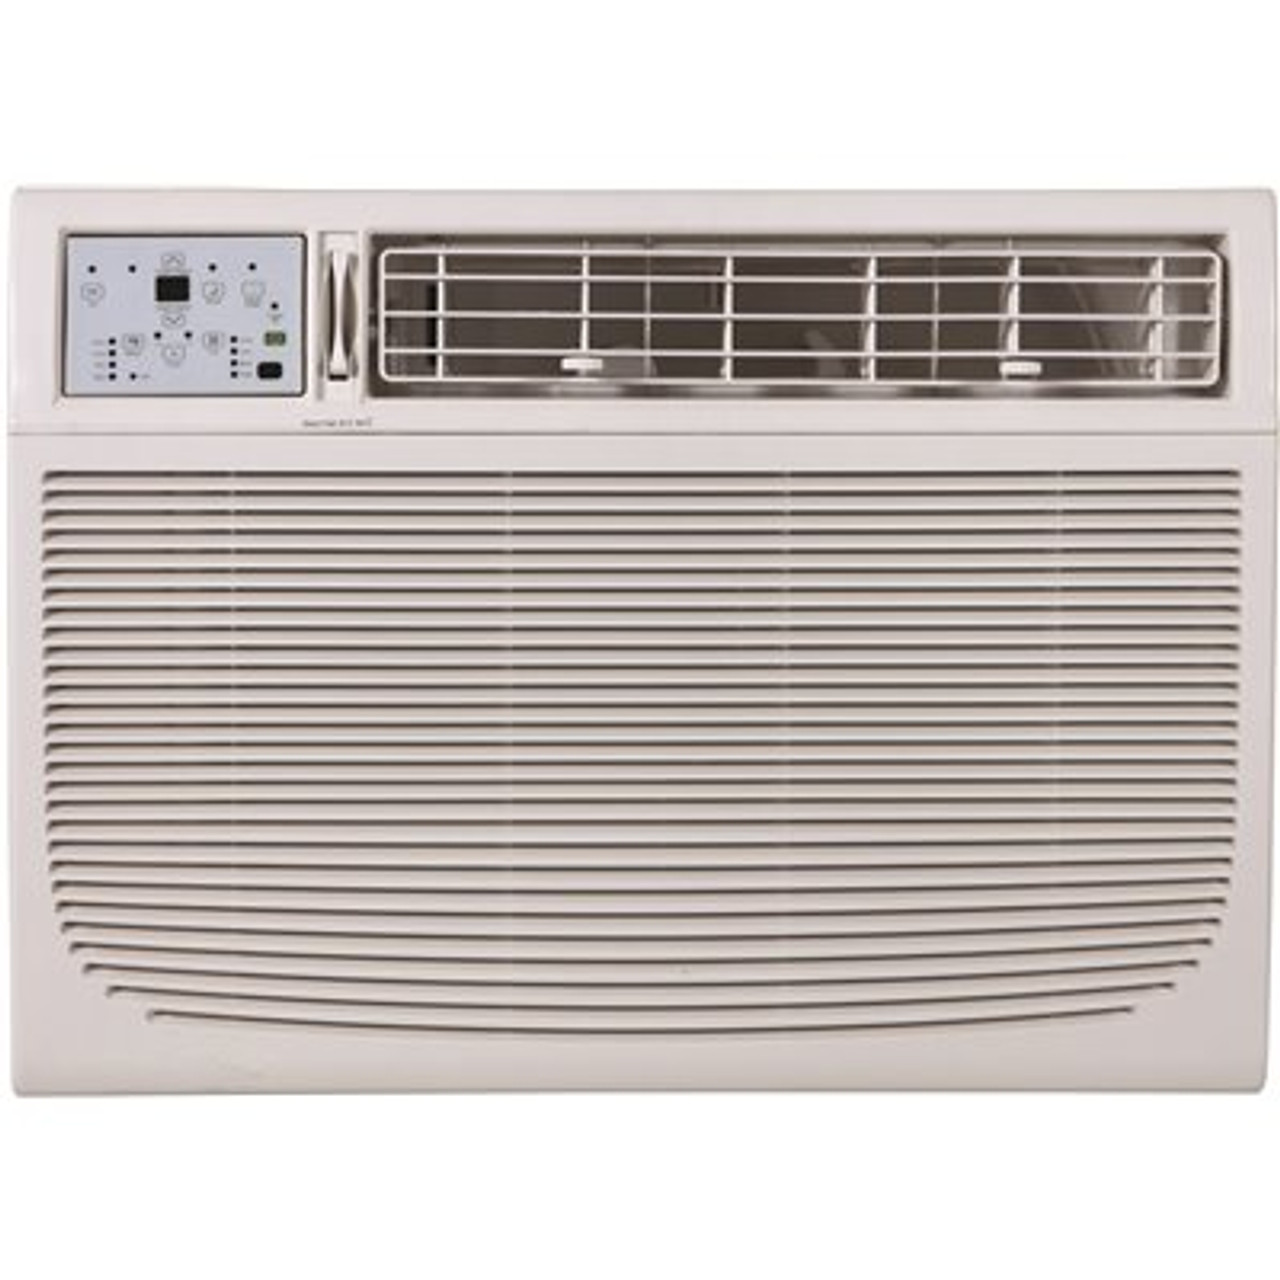 Private Brand Unbranded 25,000 Btu 230/208-Volt Window Air Conditioner With Heat In White